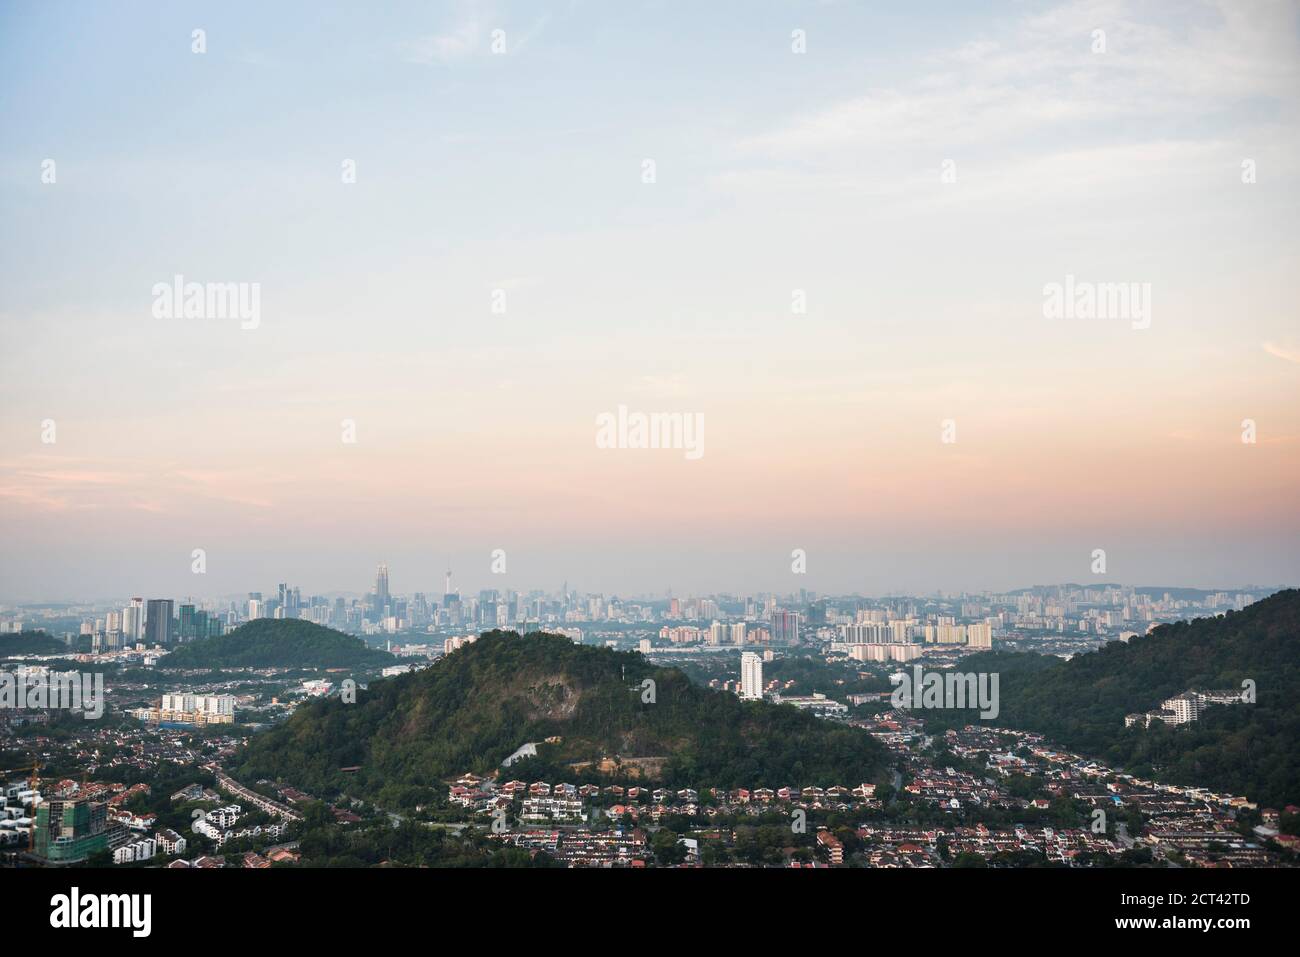 Kuala Lumpur skyline seen at sunrise from Bukit Tabur Mountain, Malaysia, Southeast Asia Stock Photo